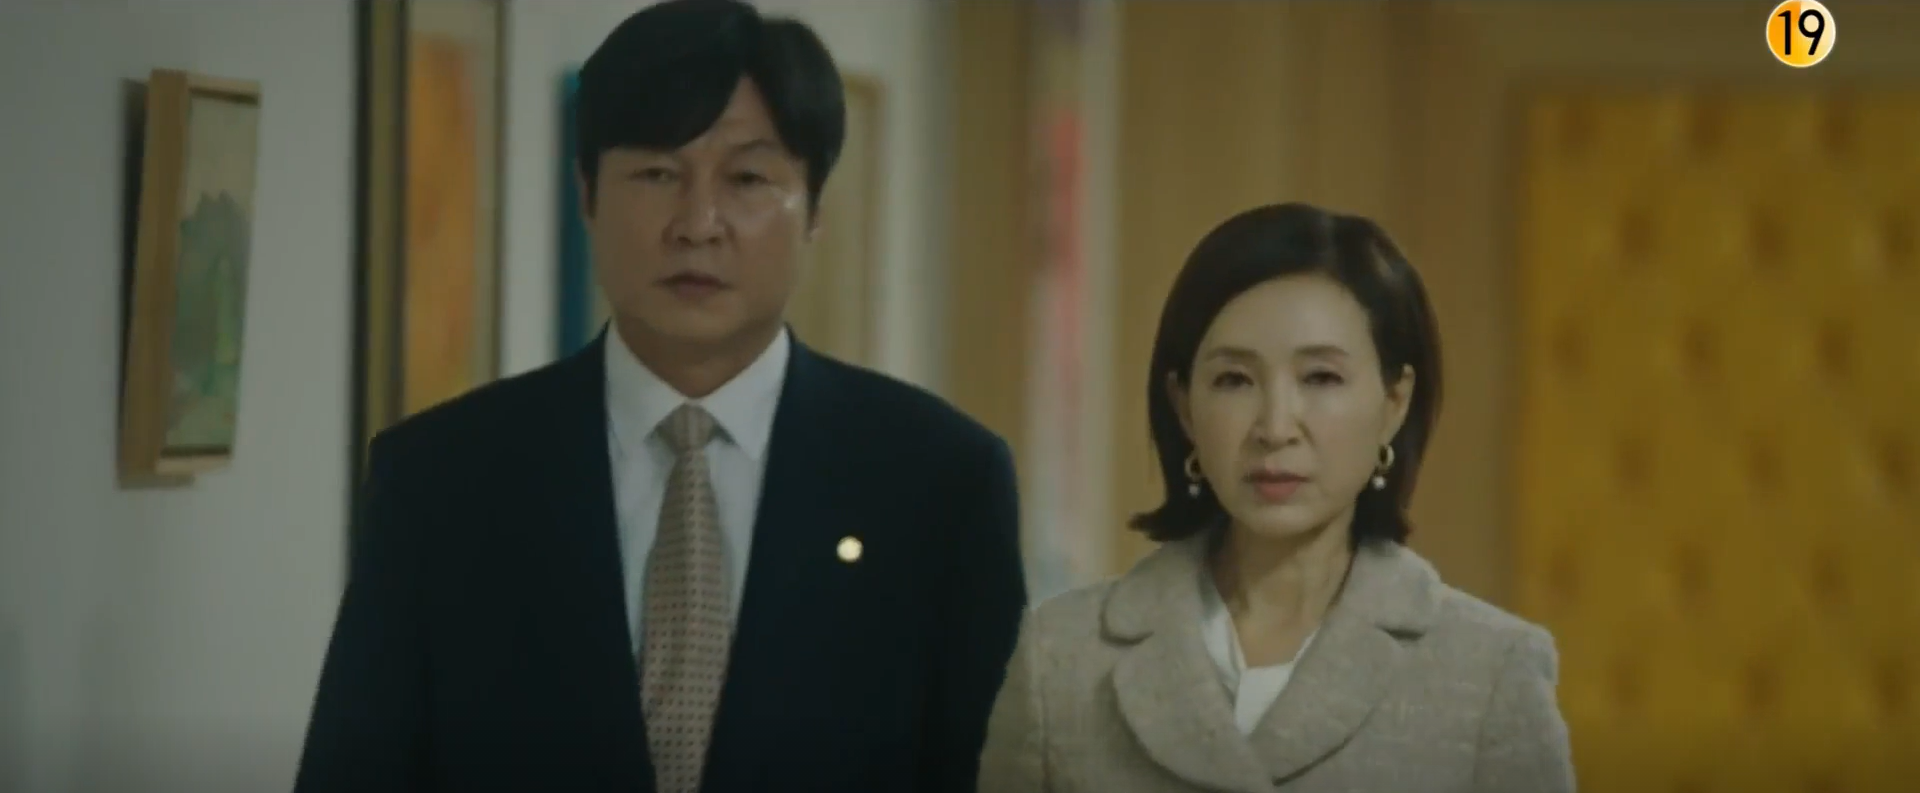 mouse korean drama review - political figures